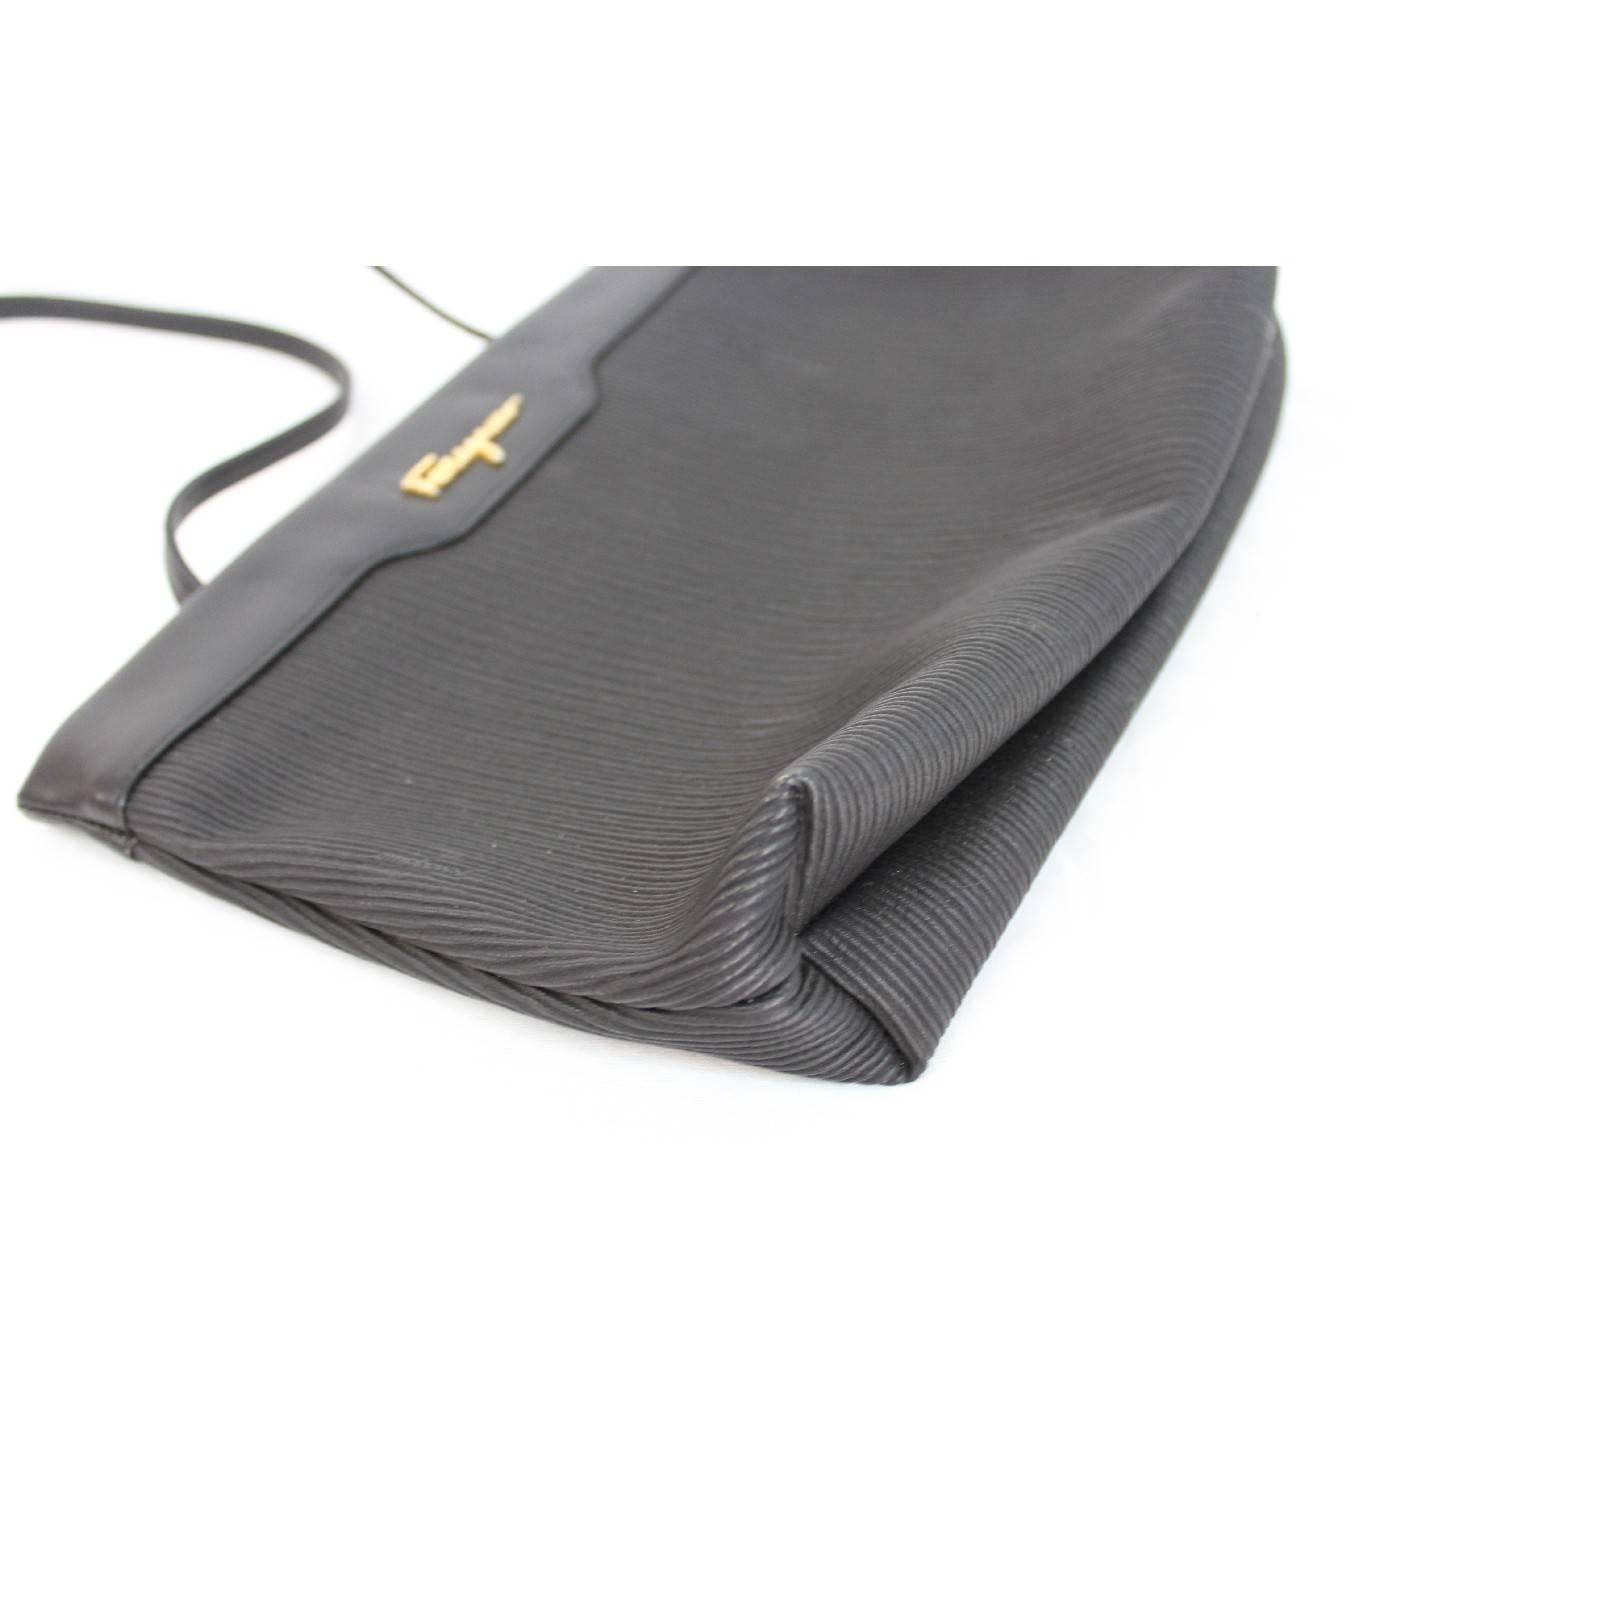 Women's Salvatore Ferragamo black leather clutch bag cod. ad 211183 made italy 1980s